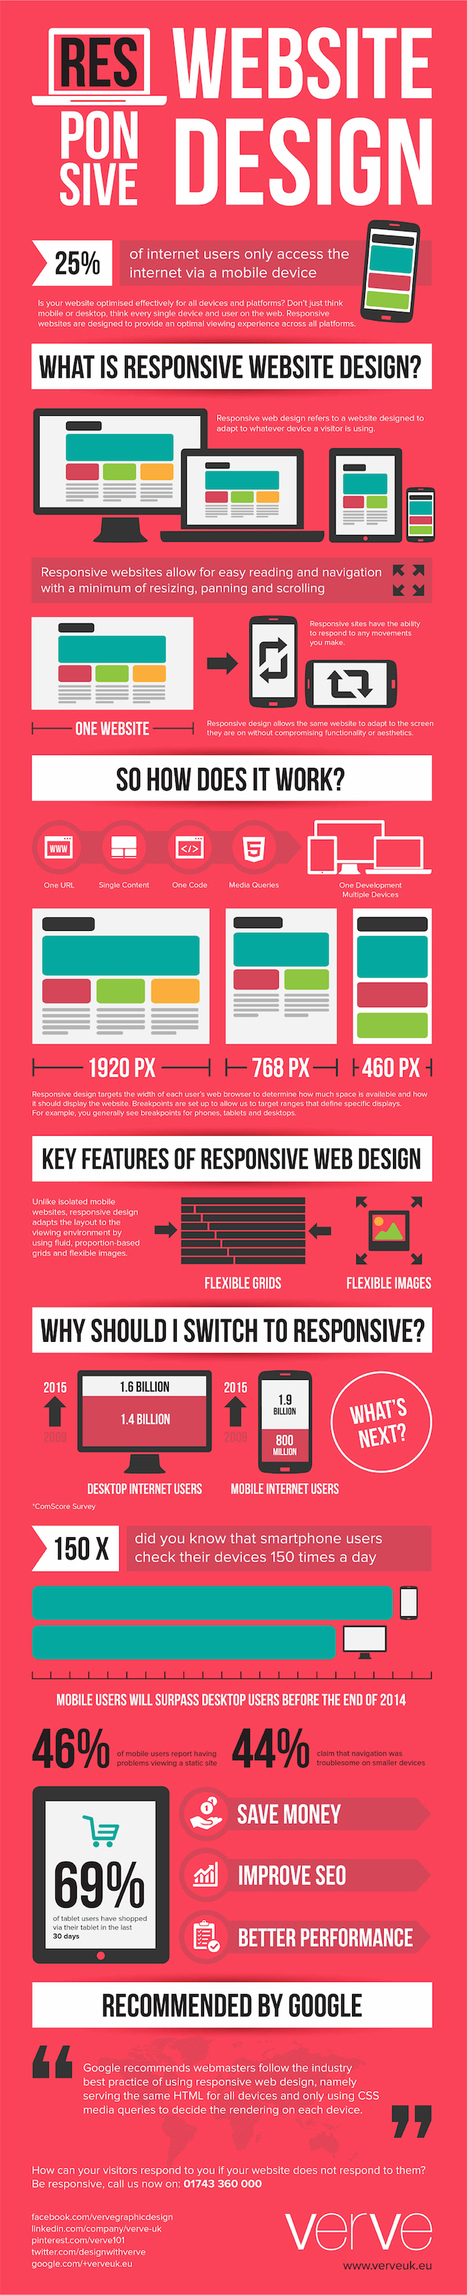 How Responsive Web Design Works [Infographic] | Must Design | Scoop.it